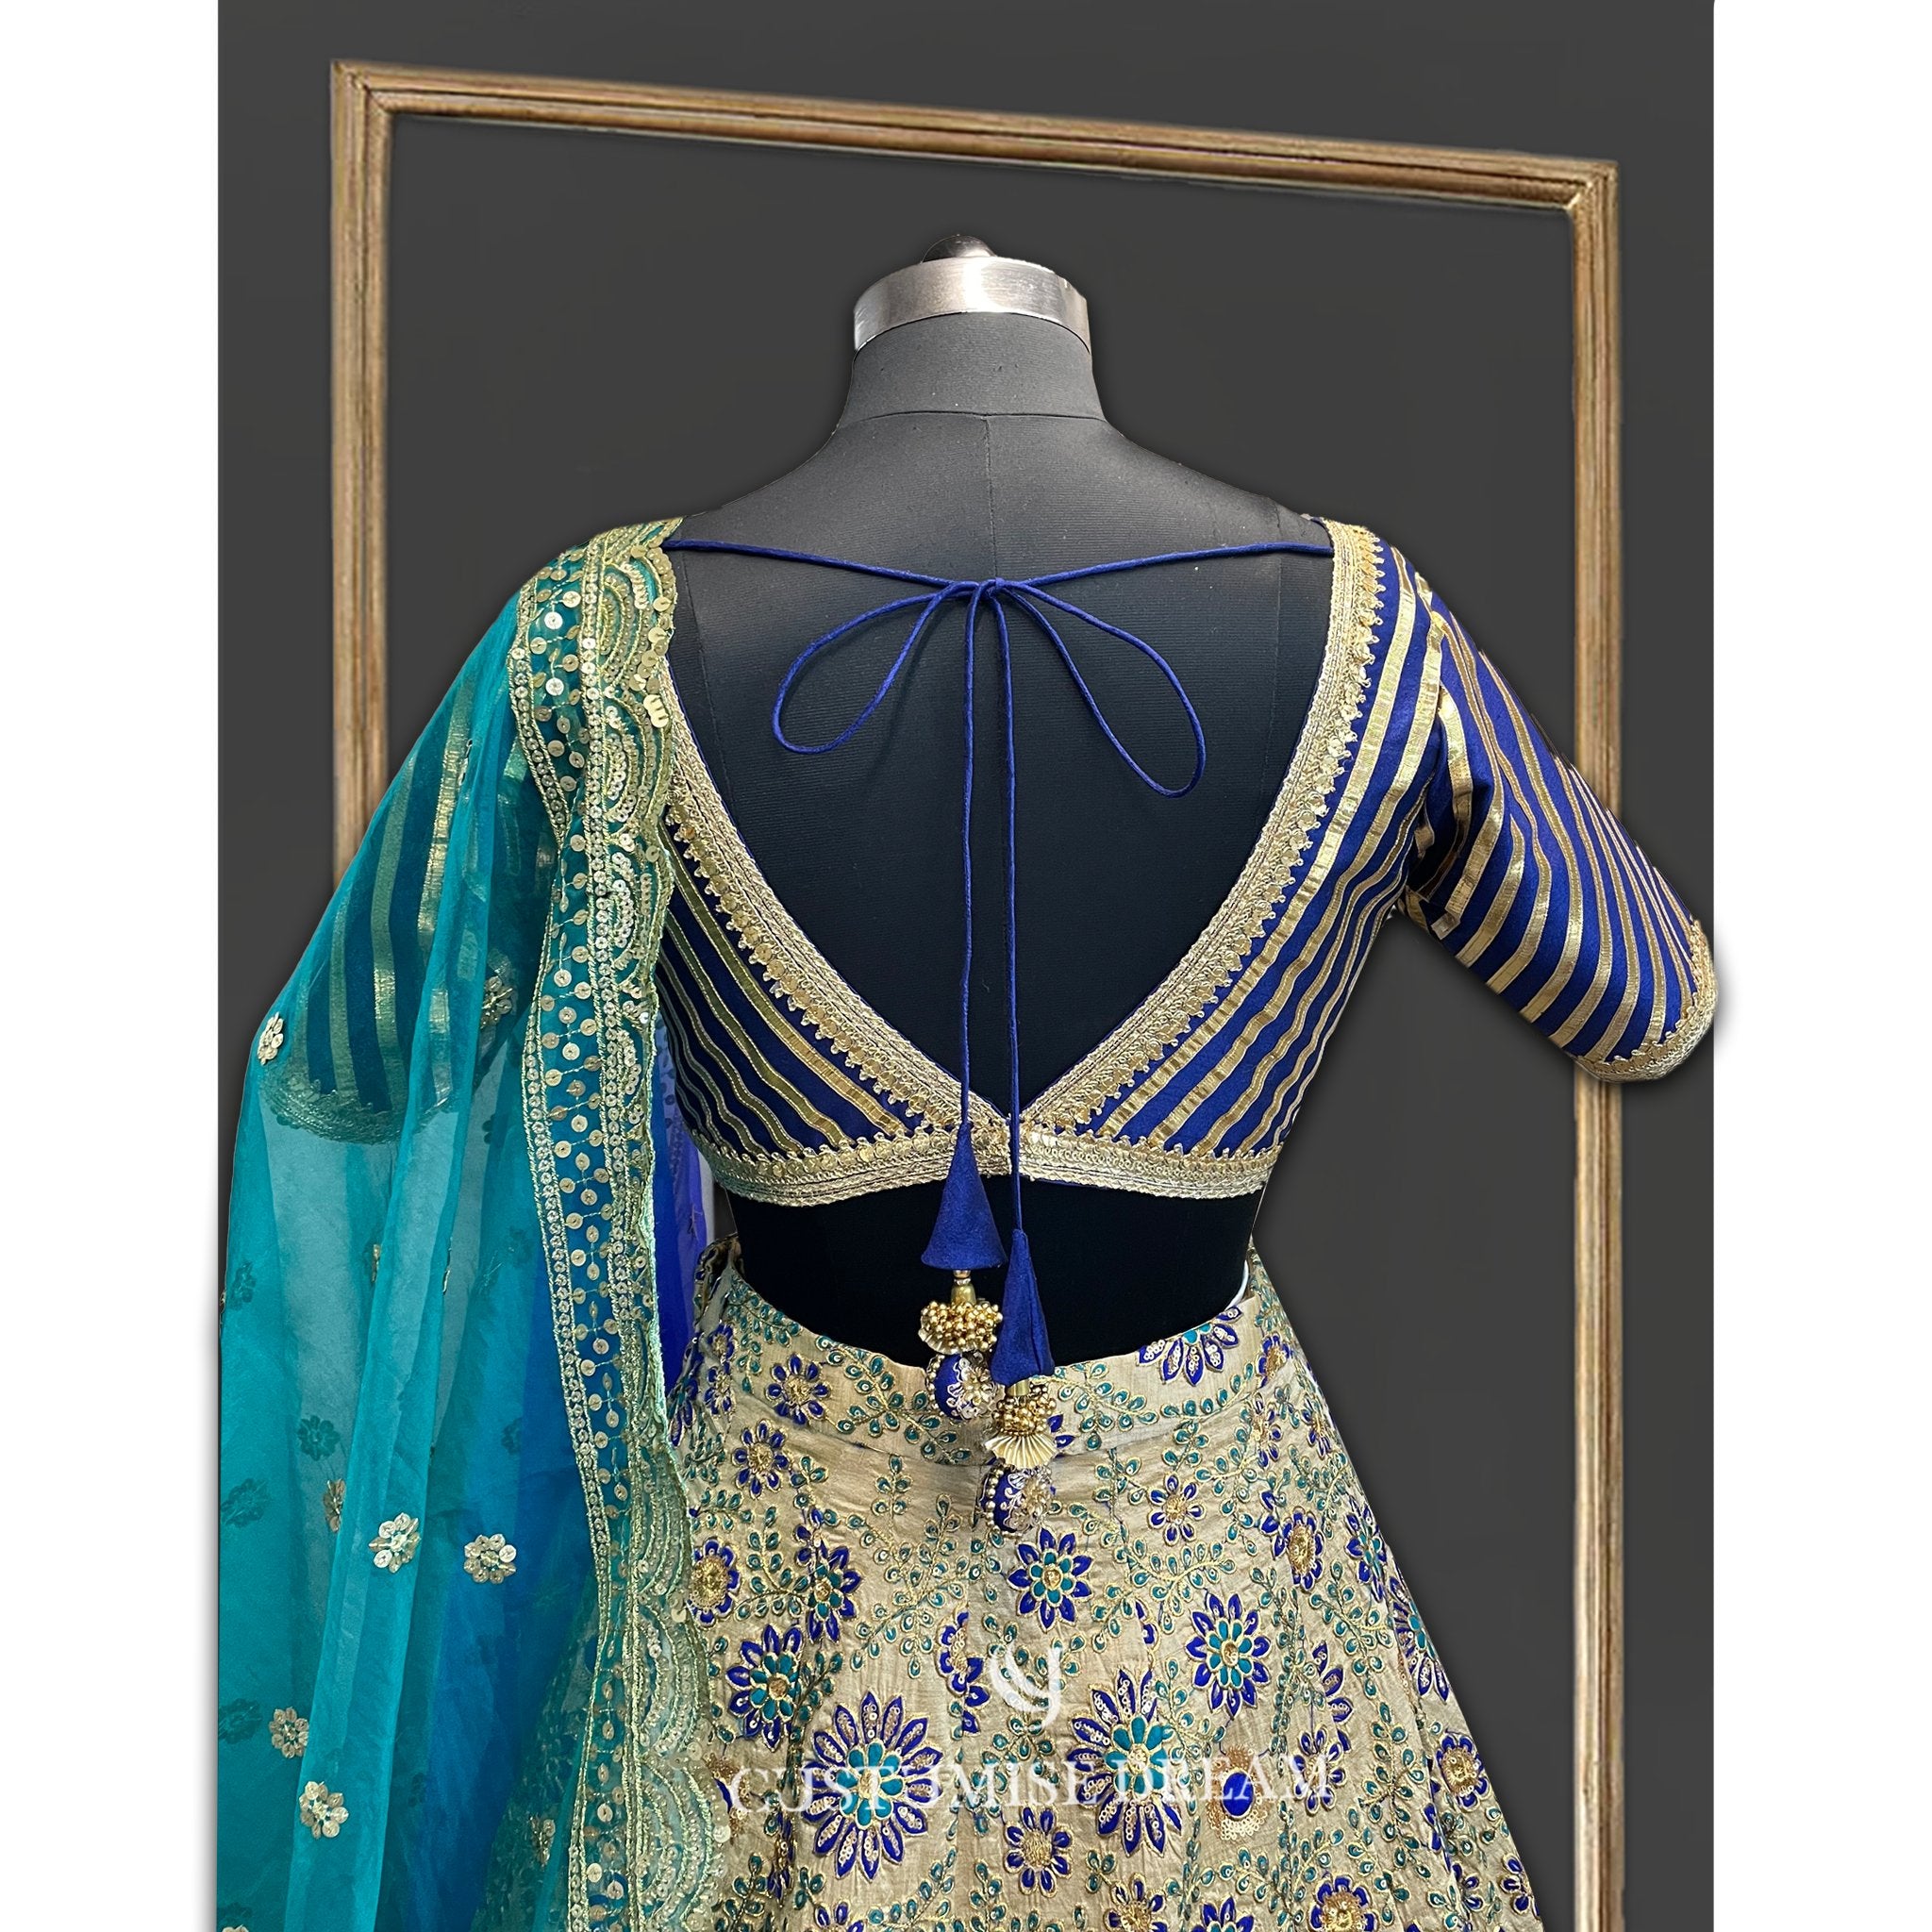 Golden Elegance: Peacock Hues Royal Lehenga - Indian Designer Bridal Wedding Outfit